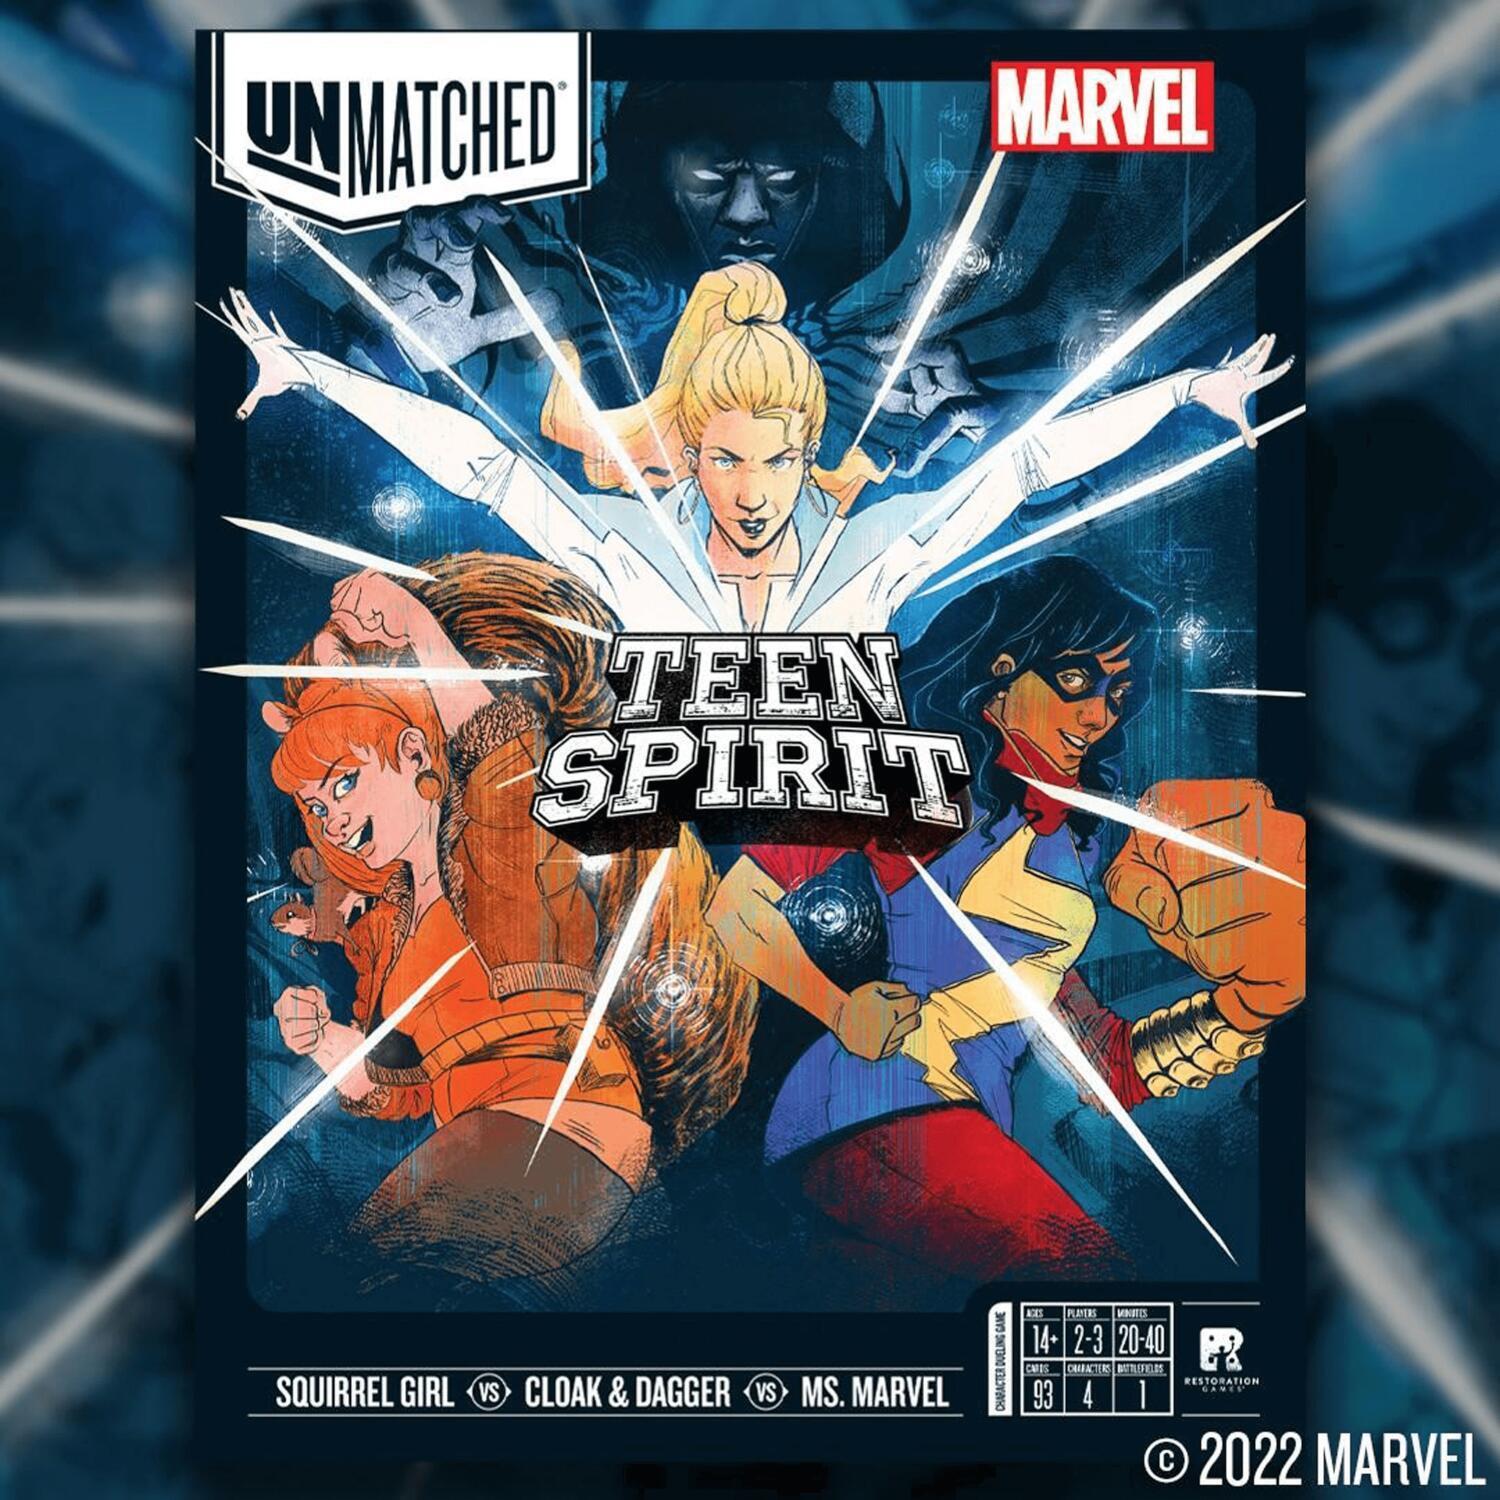 Unmatched - Marvel Teen Spirit